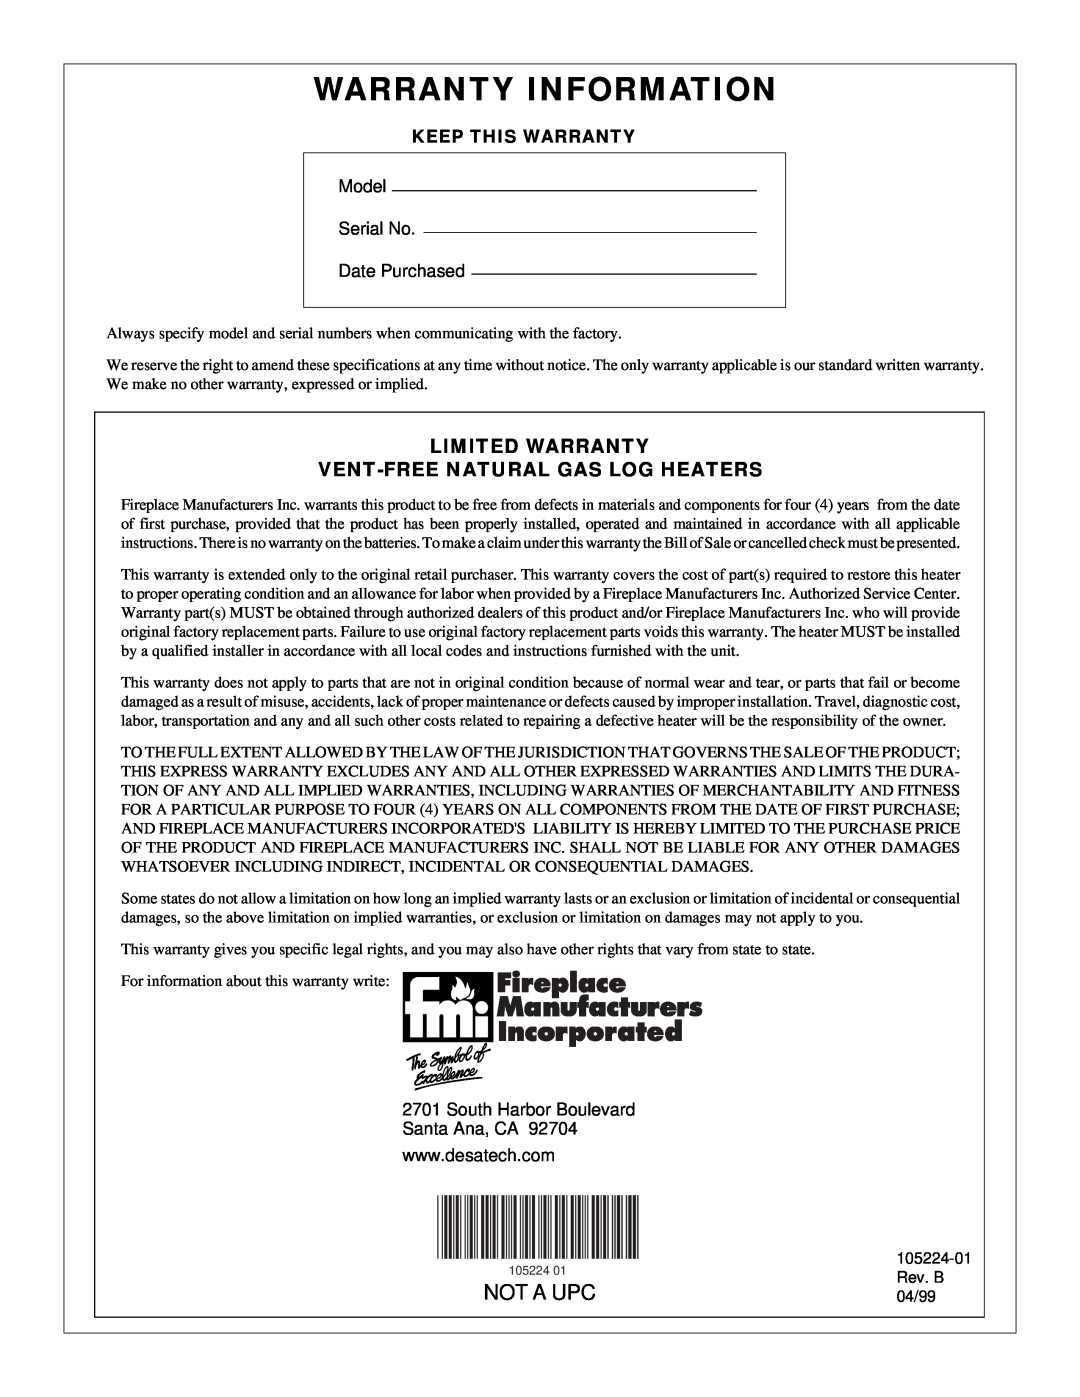 FMI FVFM27PR installation manual Warranty Information, Not A Upc, Keep This Warranty 